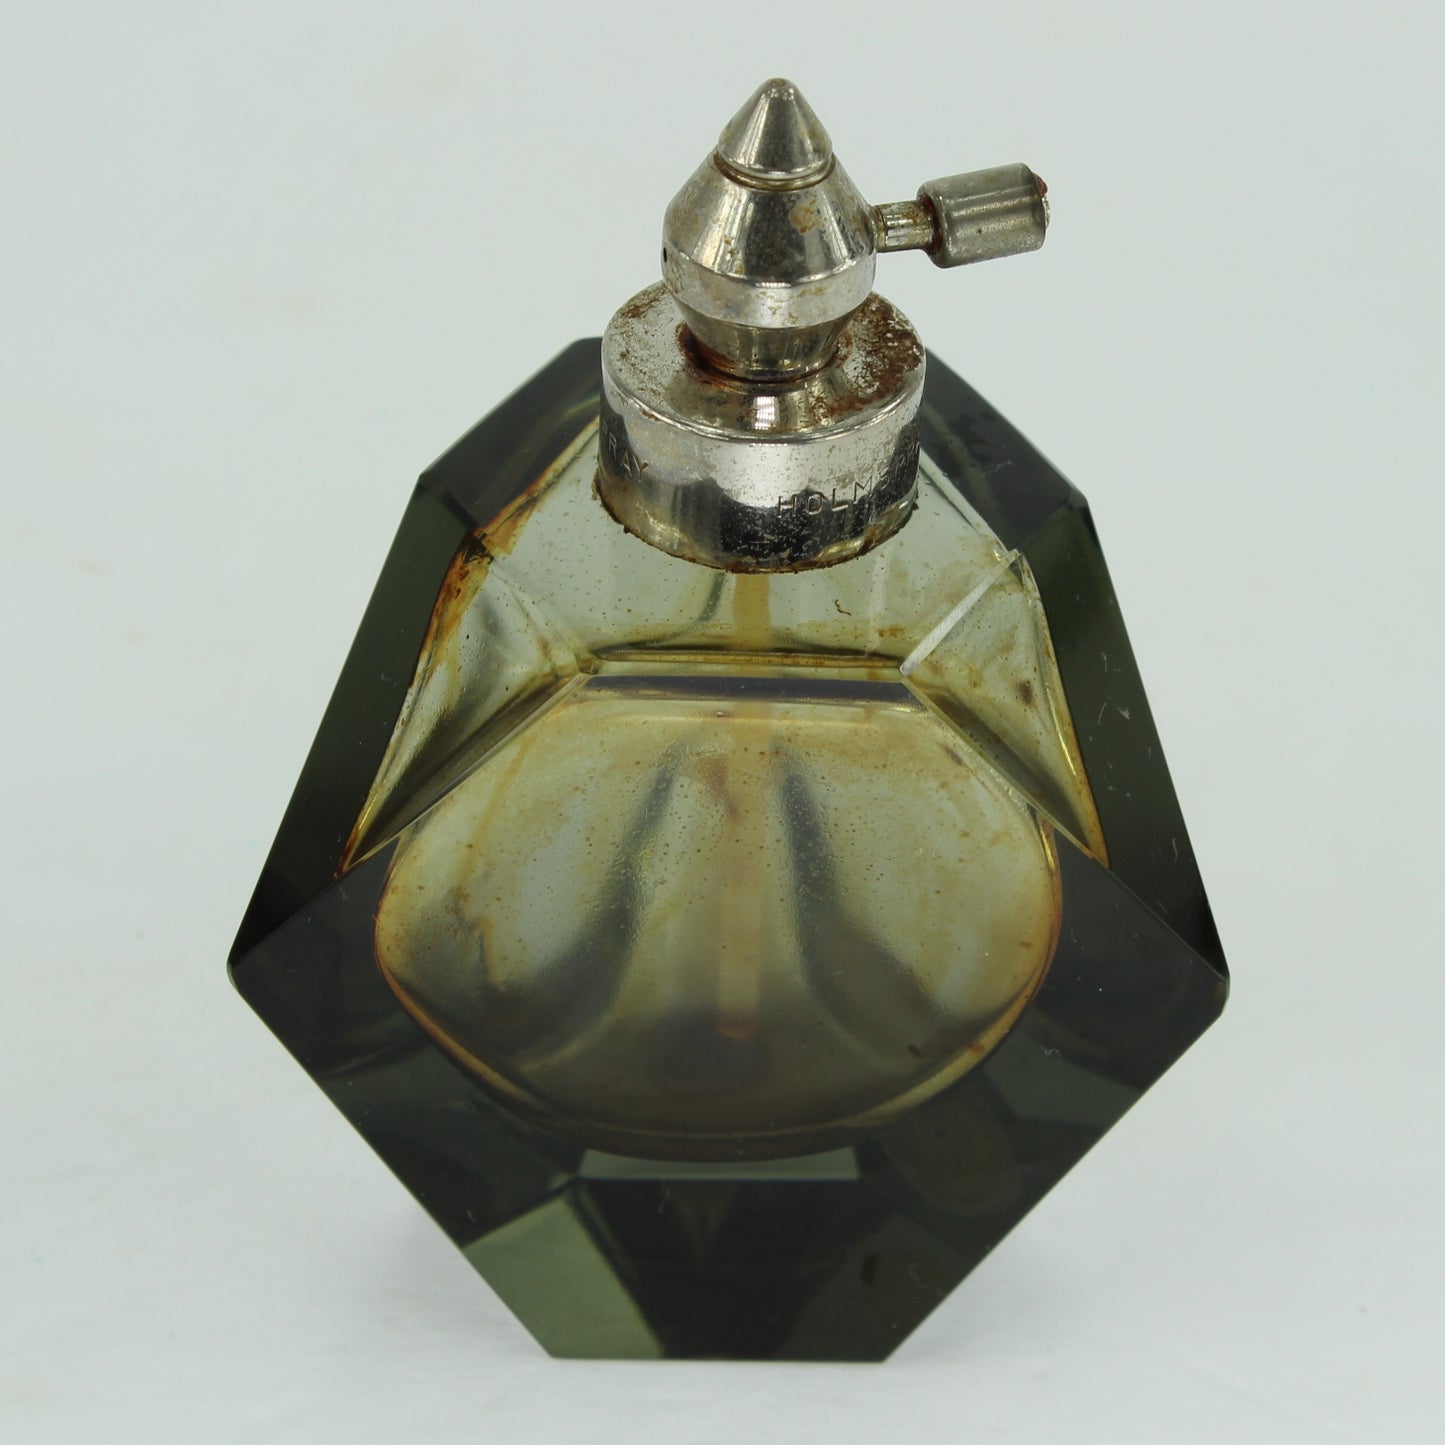 Vintage Holmspray Perfume Bottle Smoke Crystal Art Deco Made in Chartley Massachusetts USA sharp deco lines